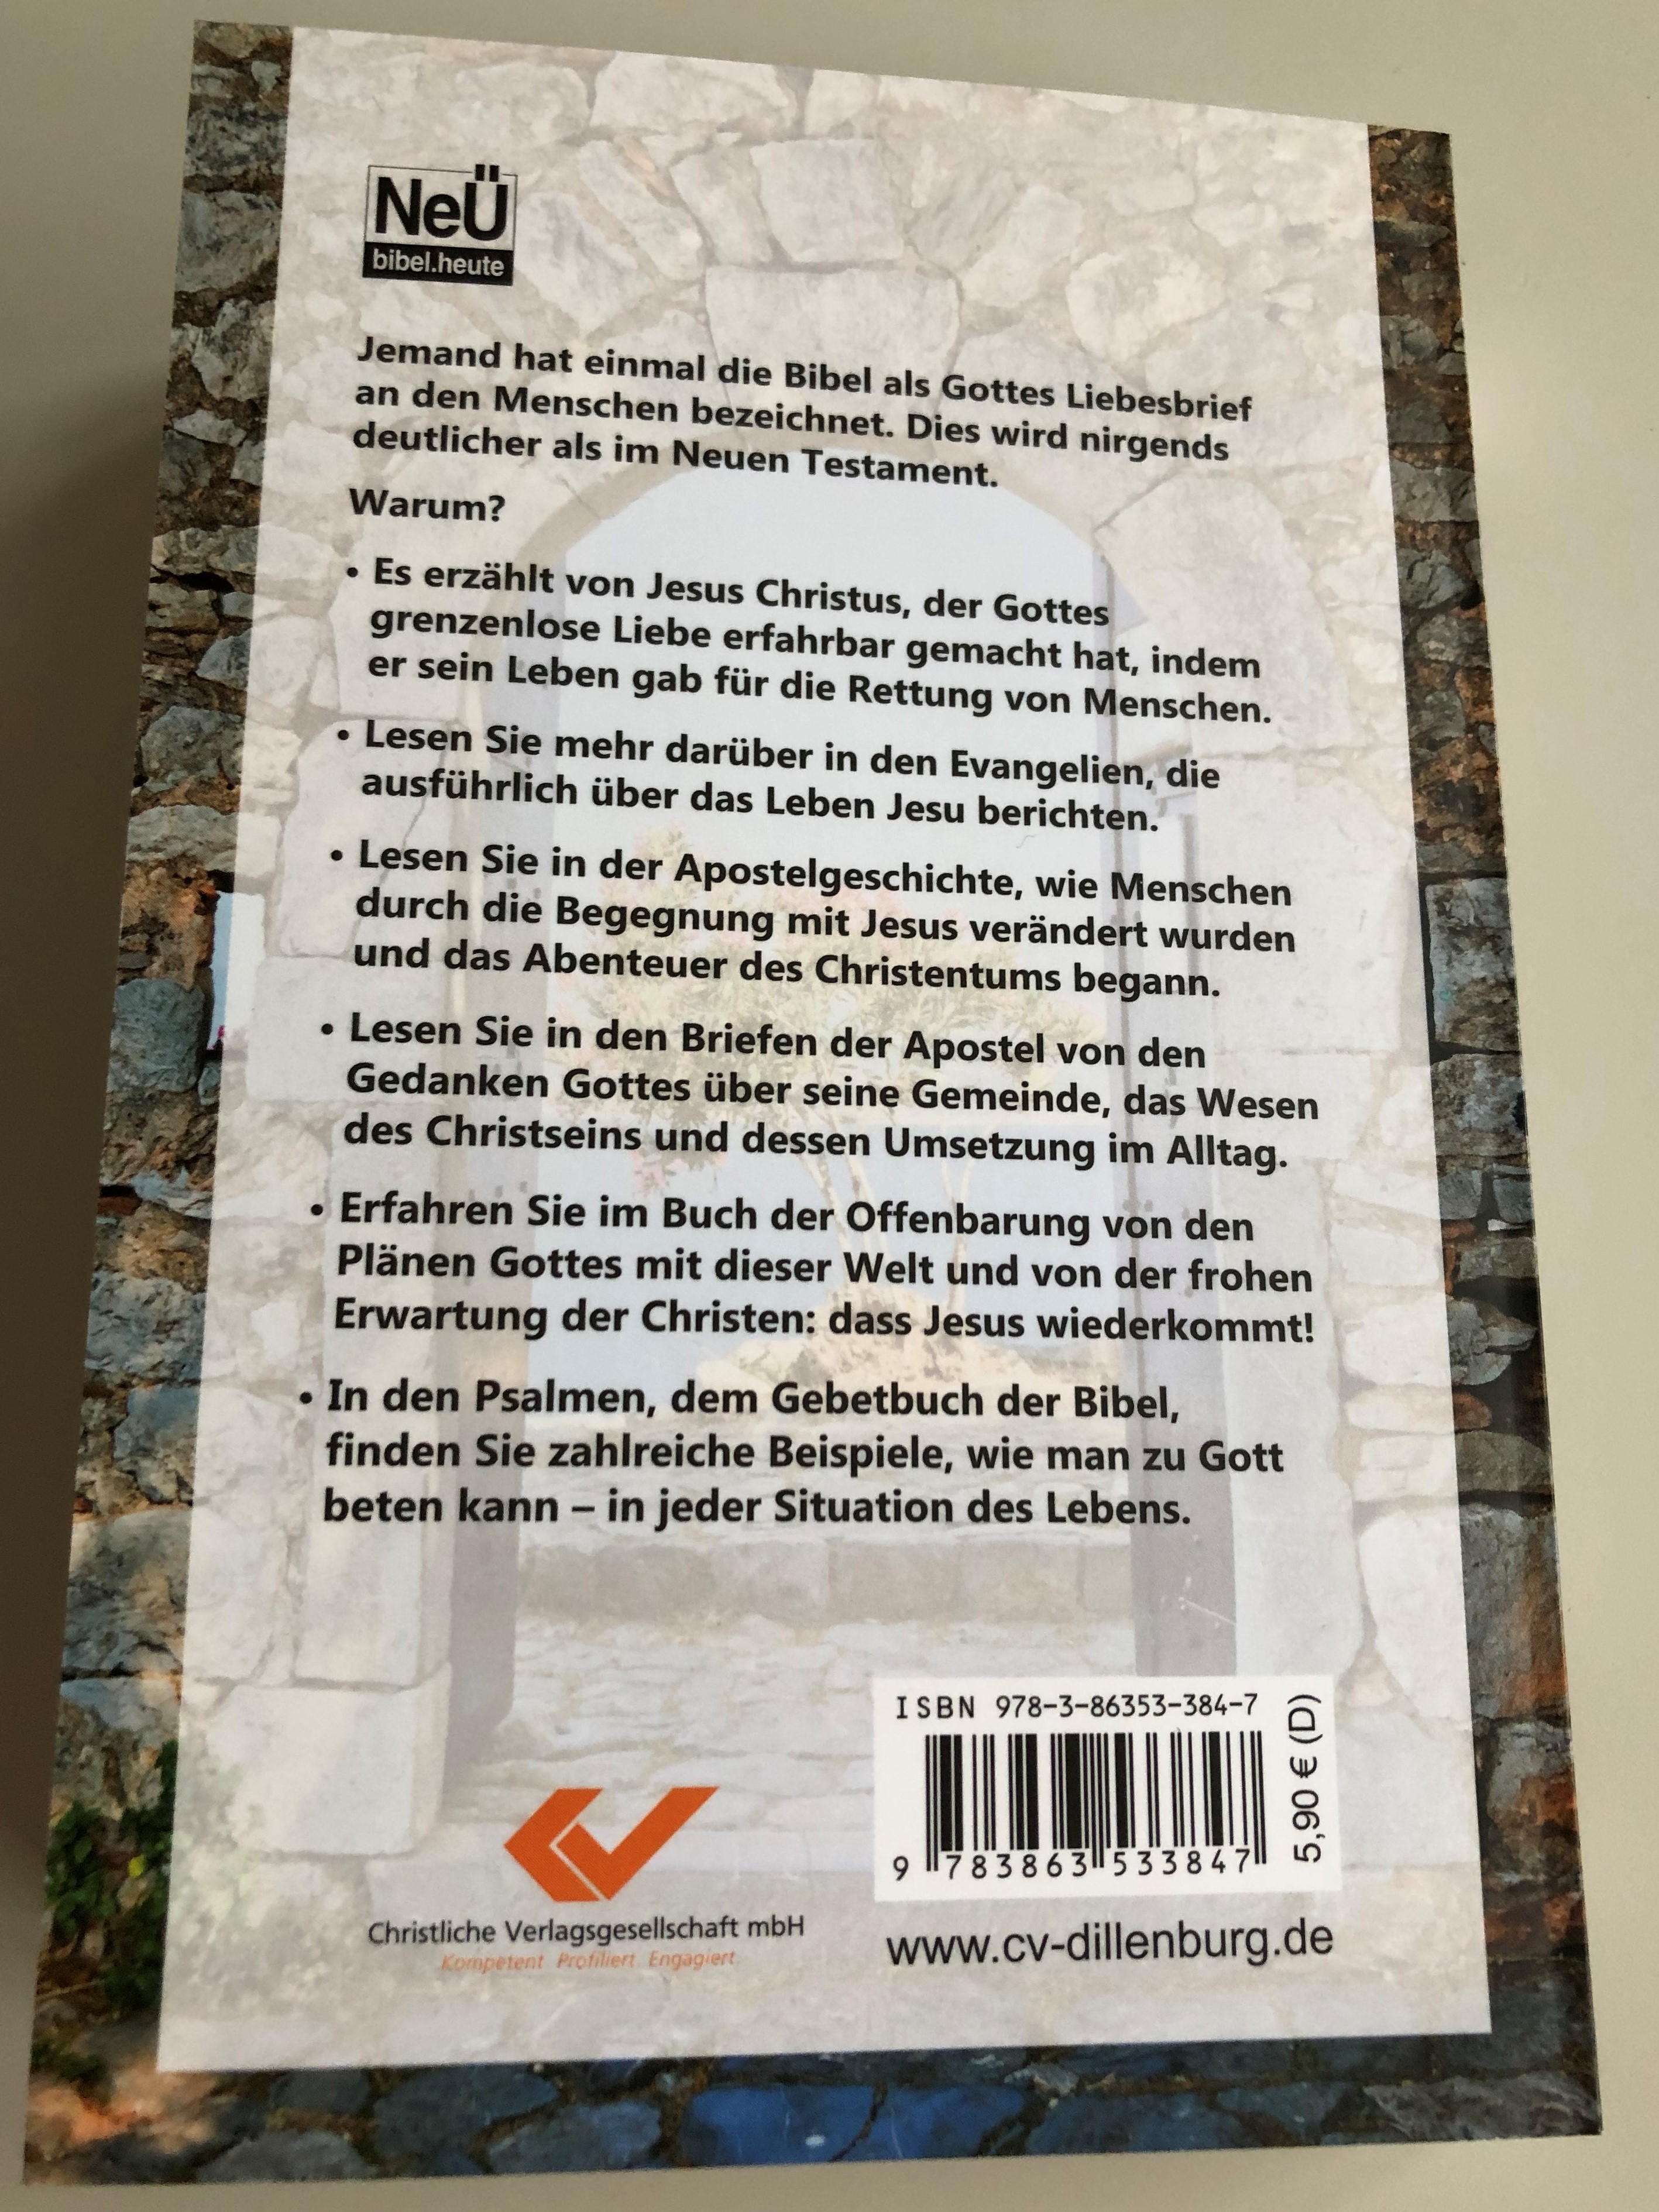 bibel.heute-german-language-nt-with-psalms-10.jpg